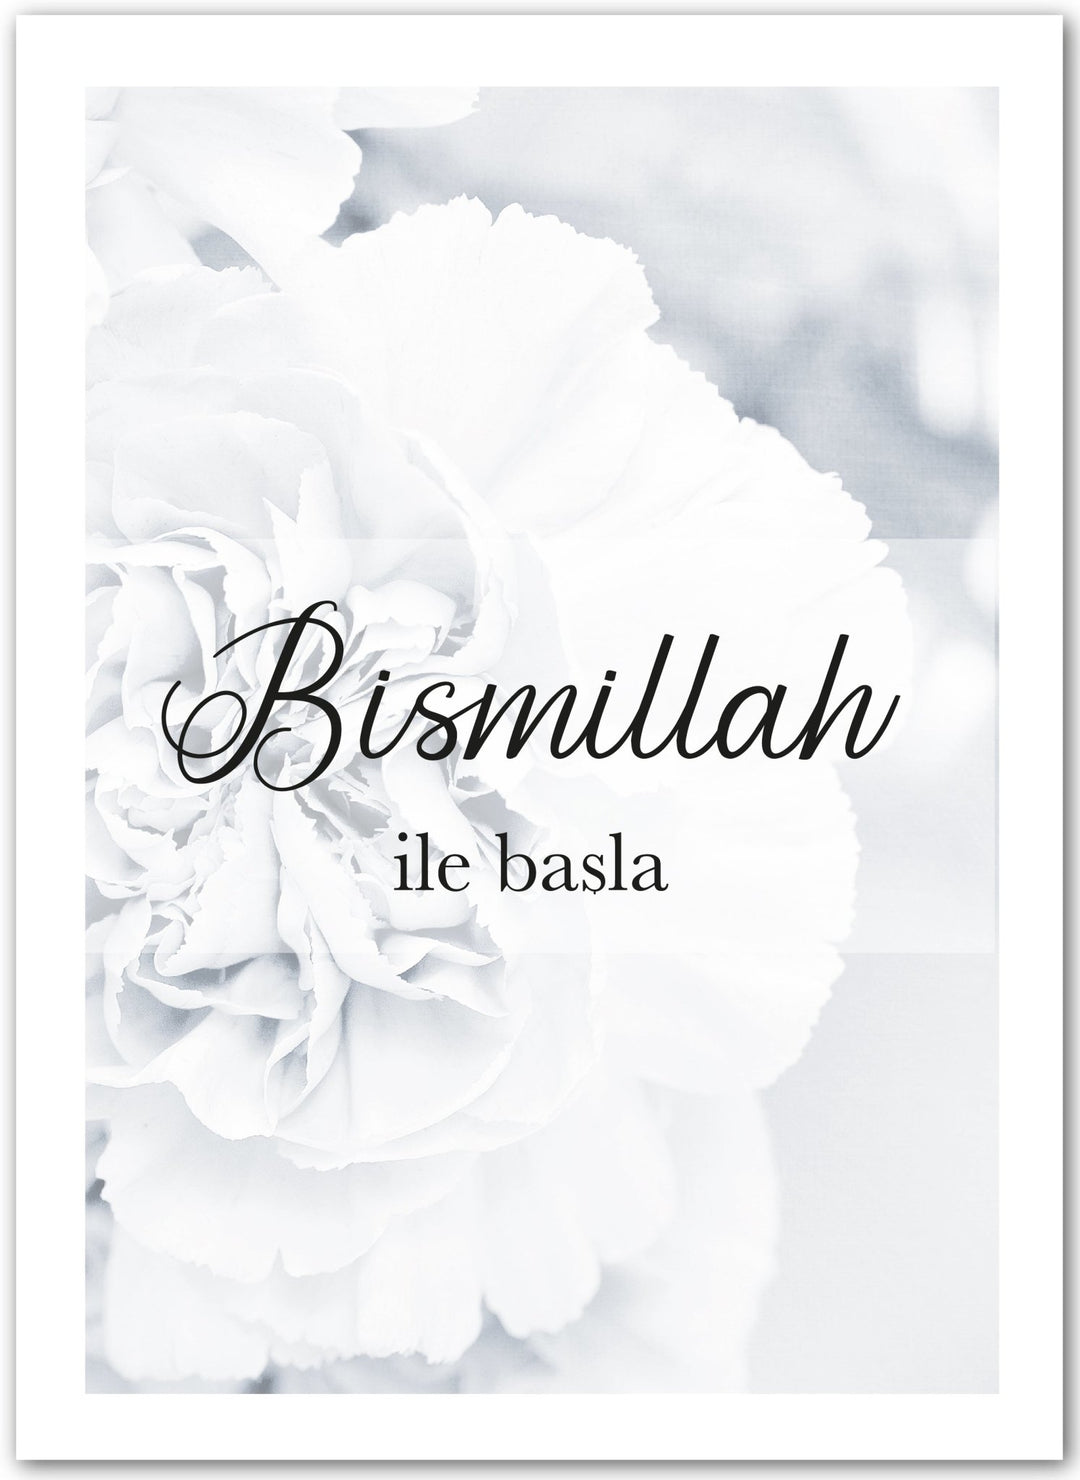 Bismillah ile basla - in beige, rosa oder weiß - Beautiful Wall